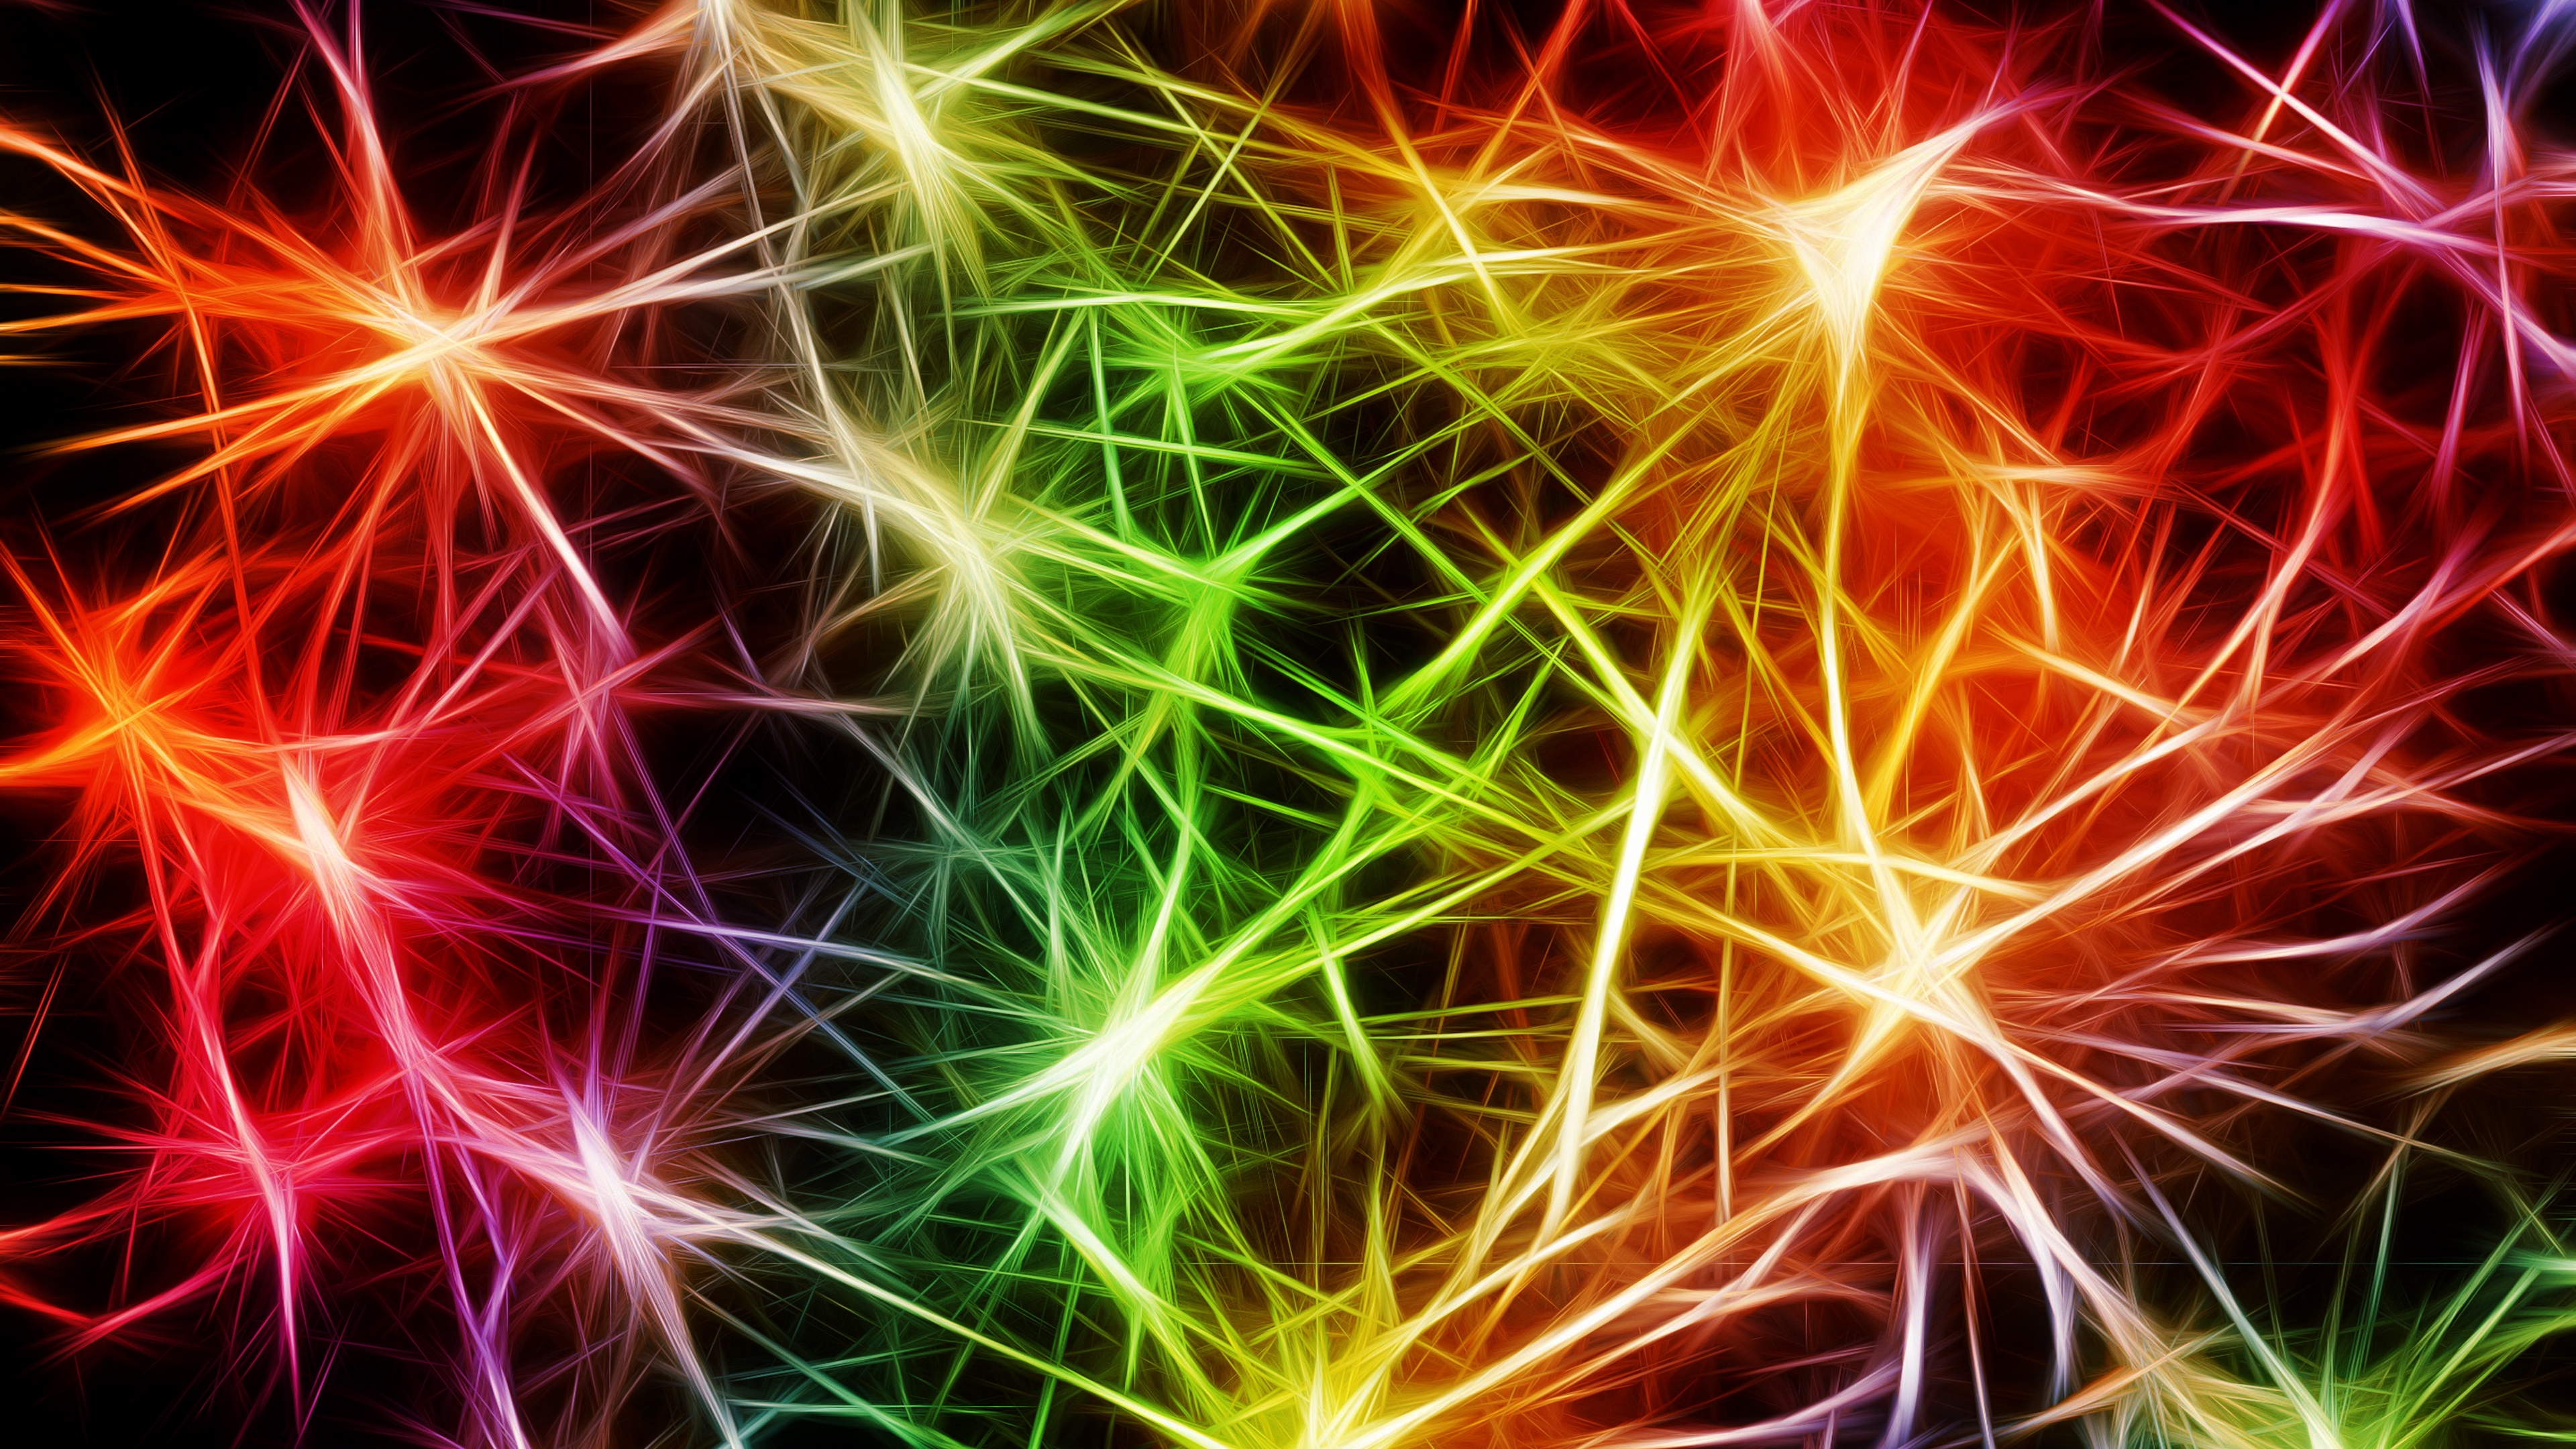 neurons pulse art abstraction colorful 4k 1539369323 - neurons, pulse, art, abstraction, colorful 4k - pulse, neurons, art